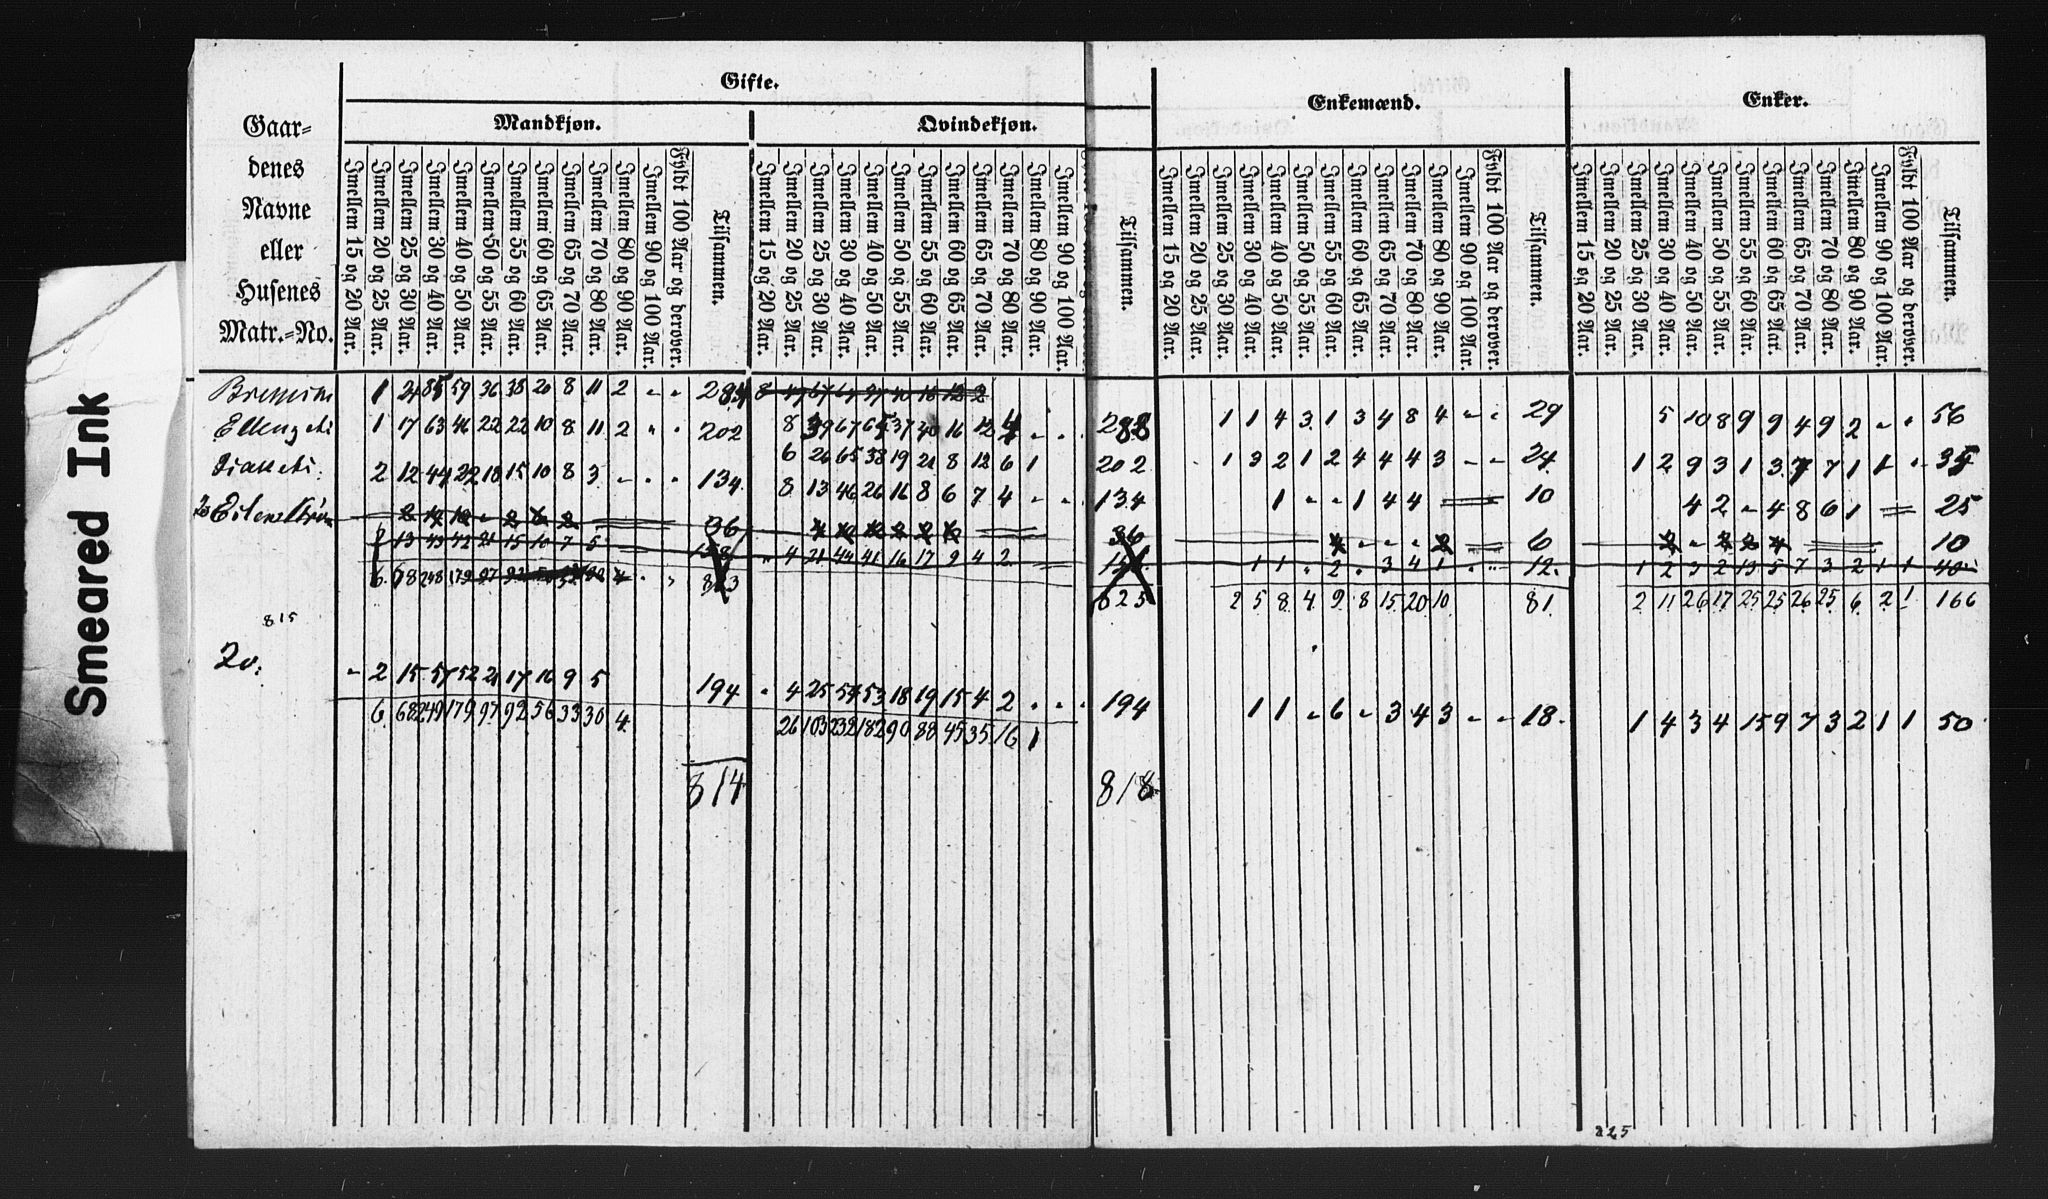 SAT, Census 1835 for Kvernes, 1835, p. 6